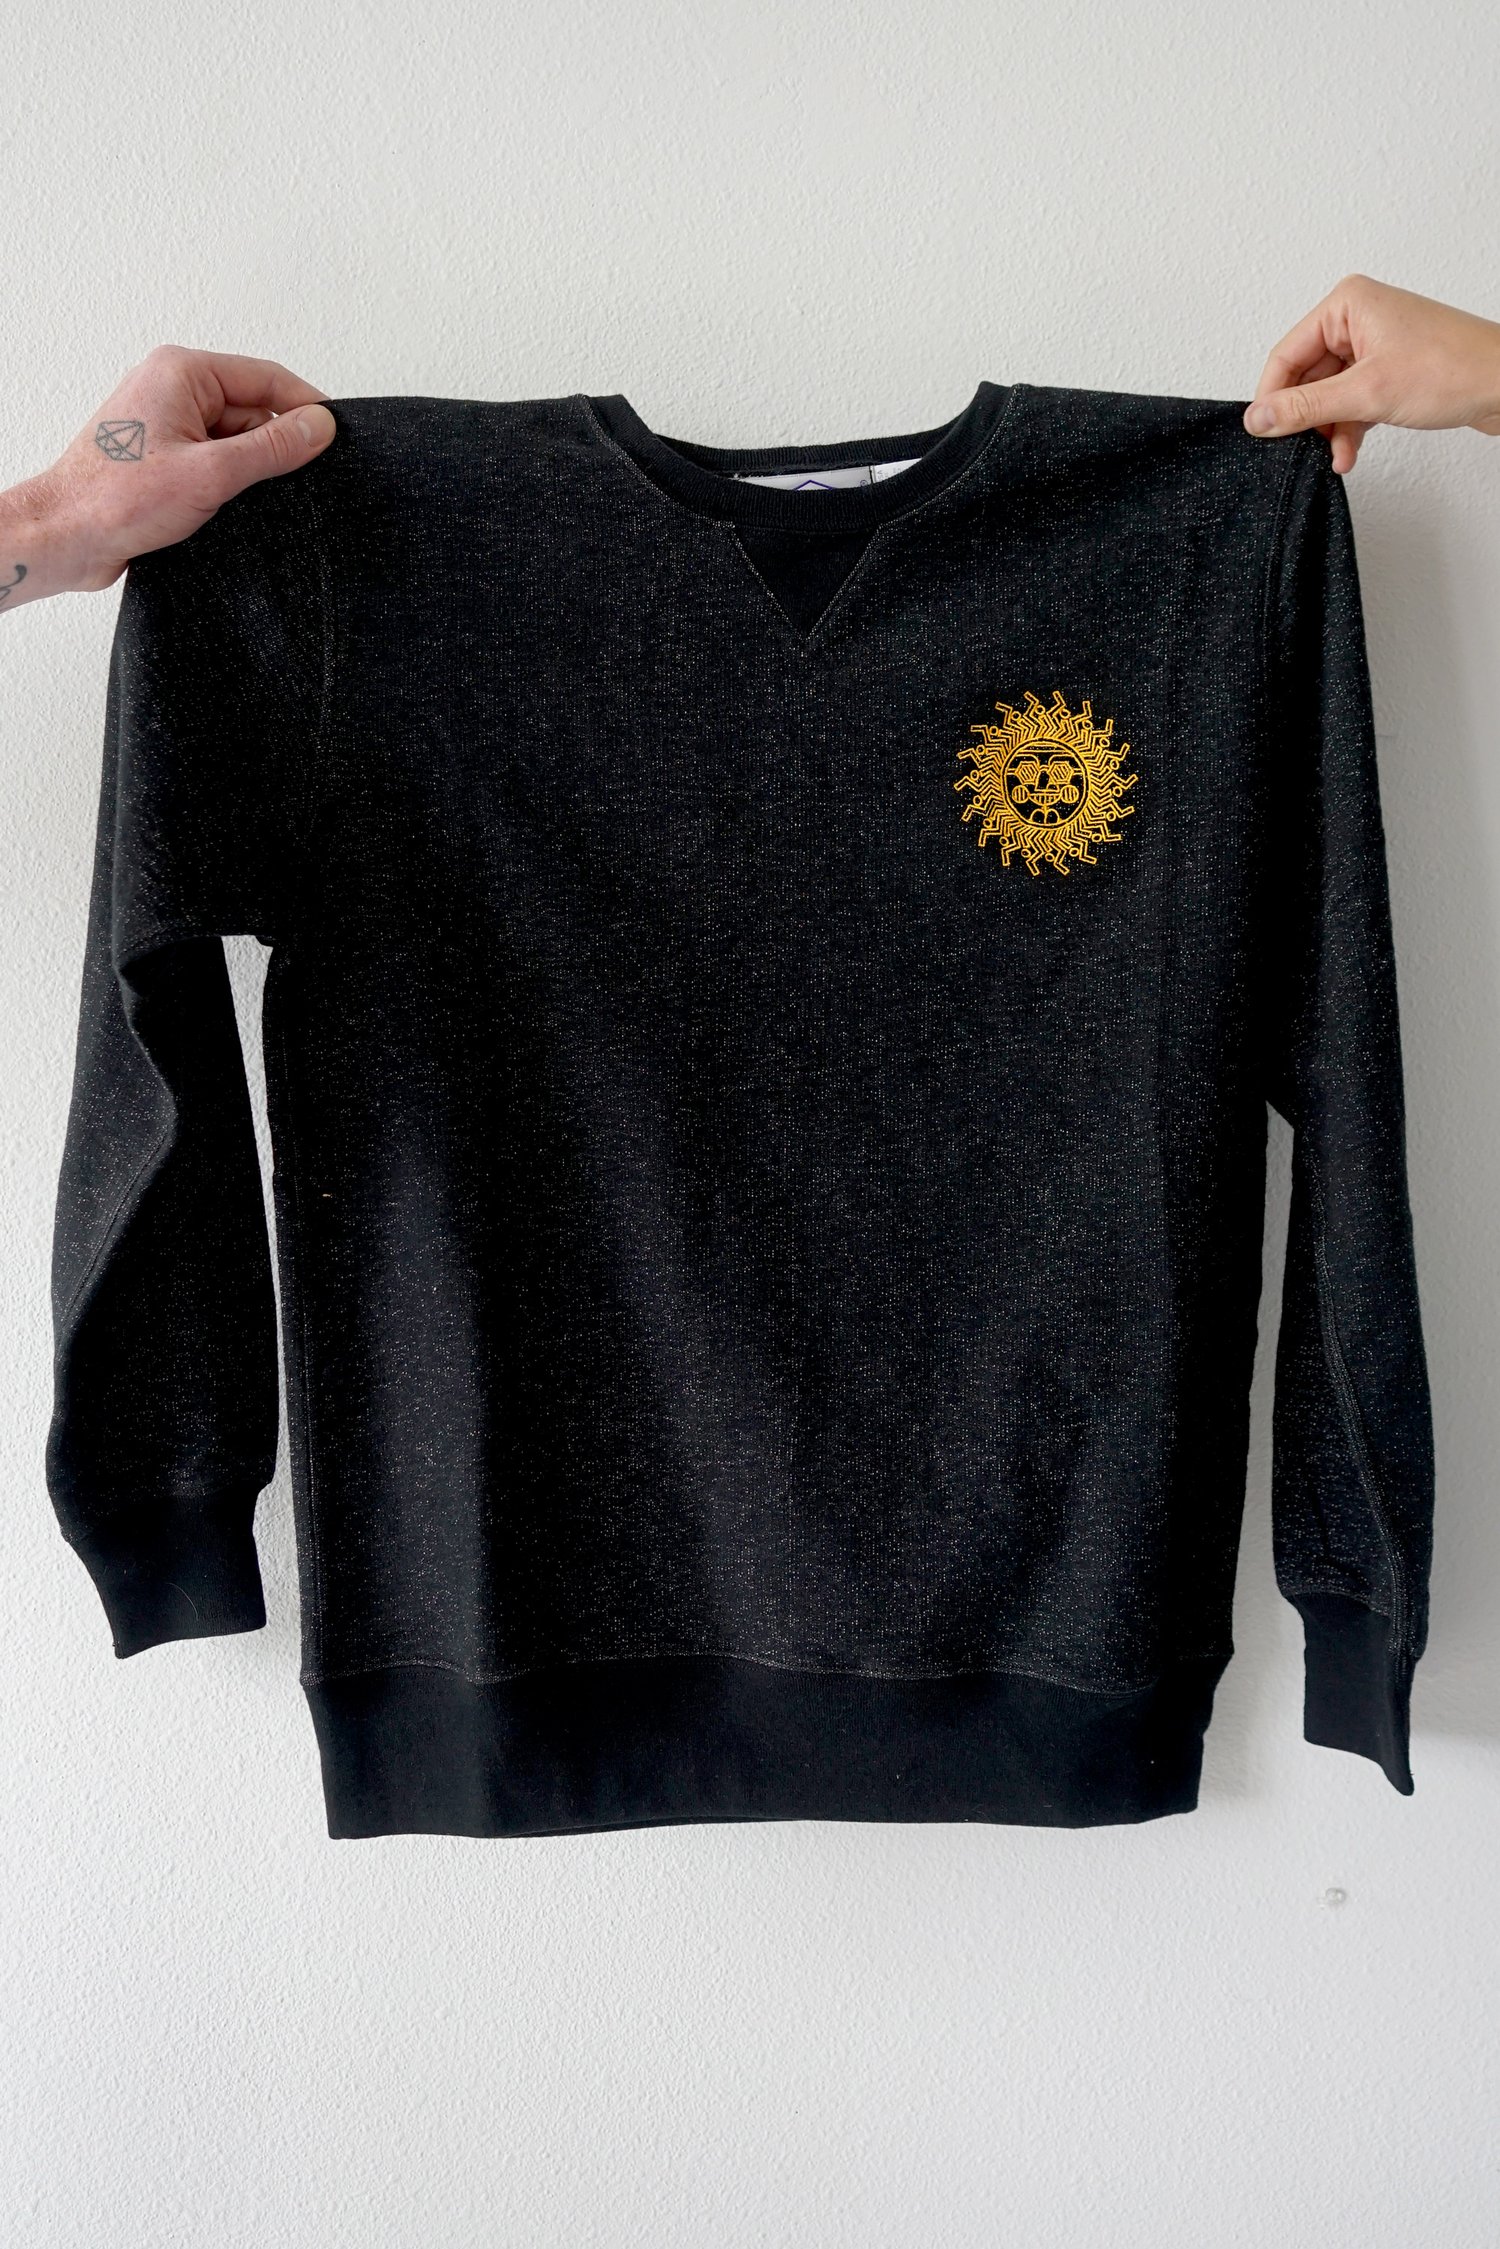 Image of Sun Sweatshirt in Black